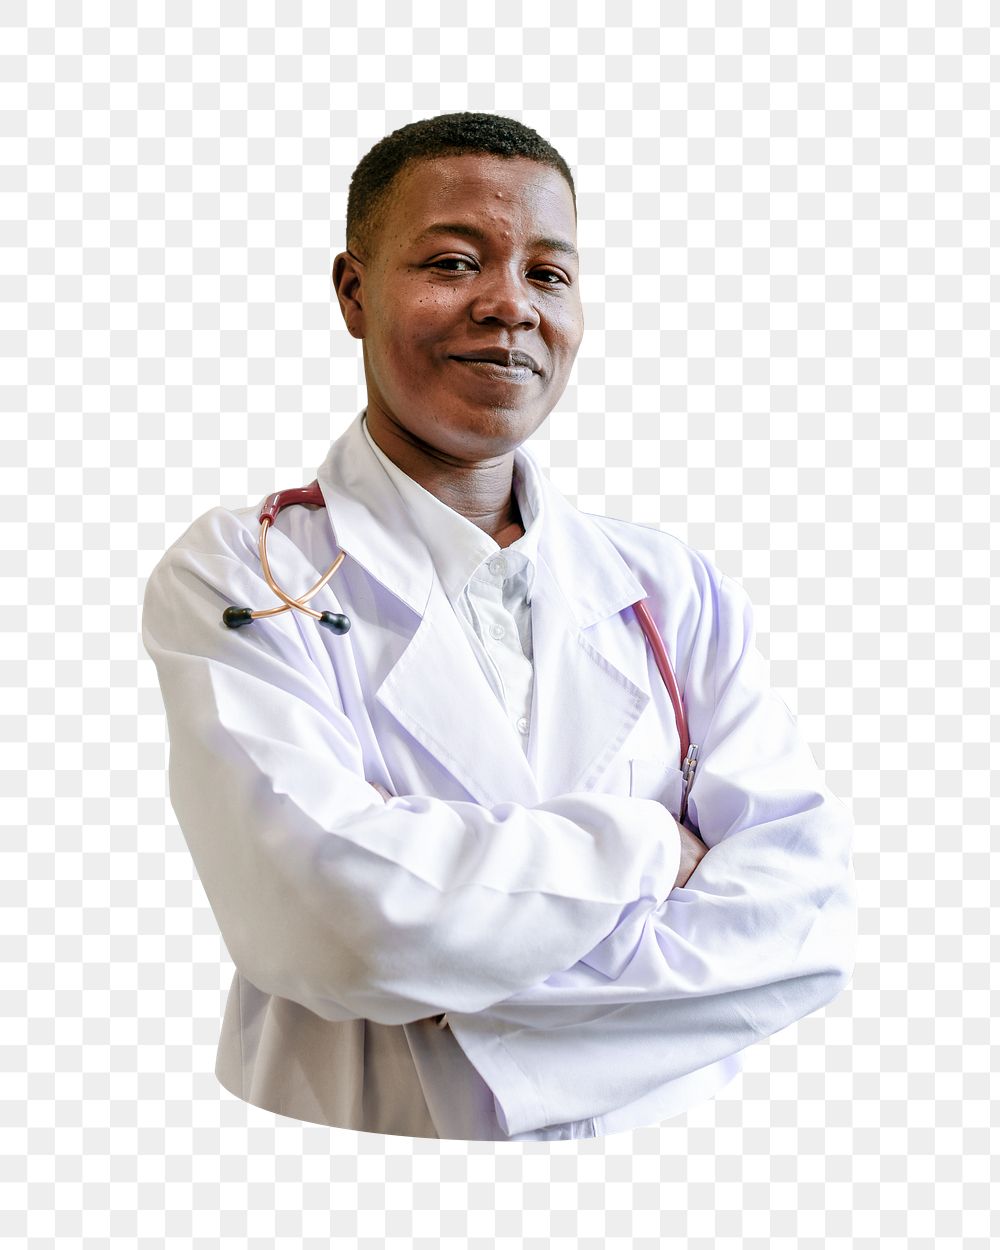 African doctor png sticker, transparent background